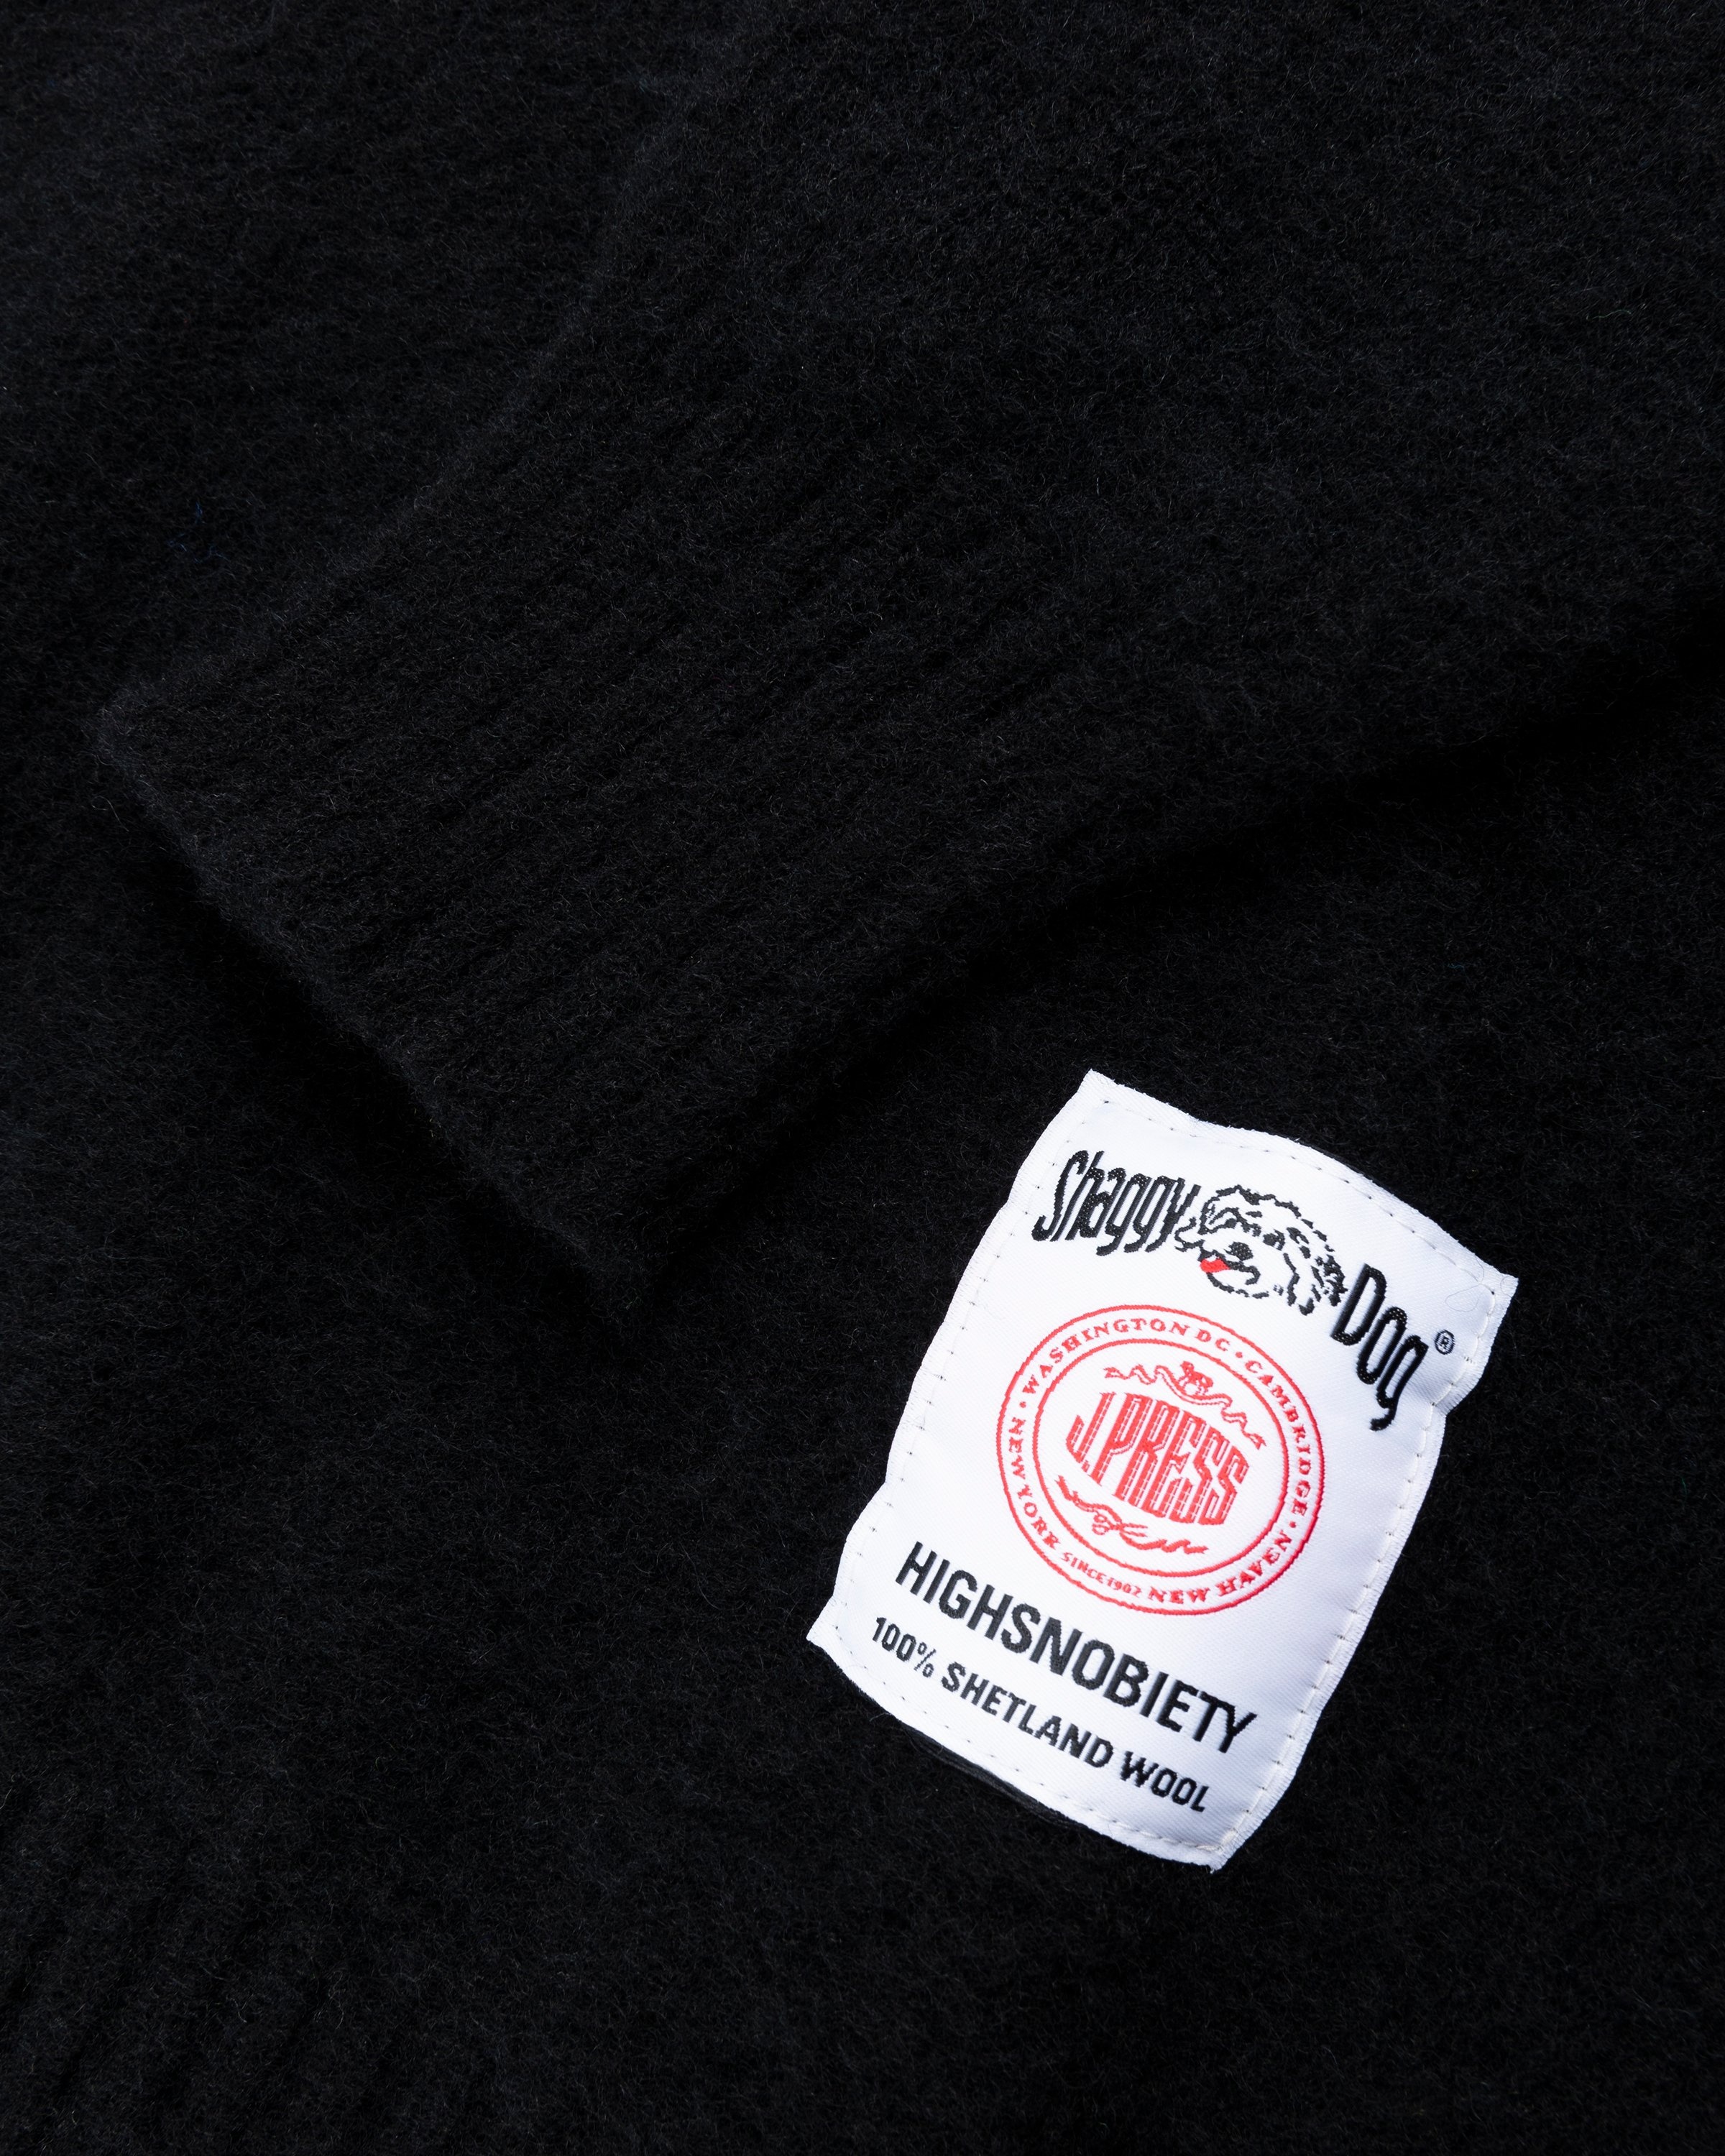 J. Press x Highsnobiety – Shaggy Dog Solid Sweater Black - Knitwear - Black - Image 5